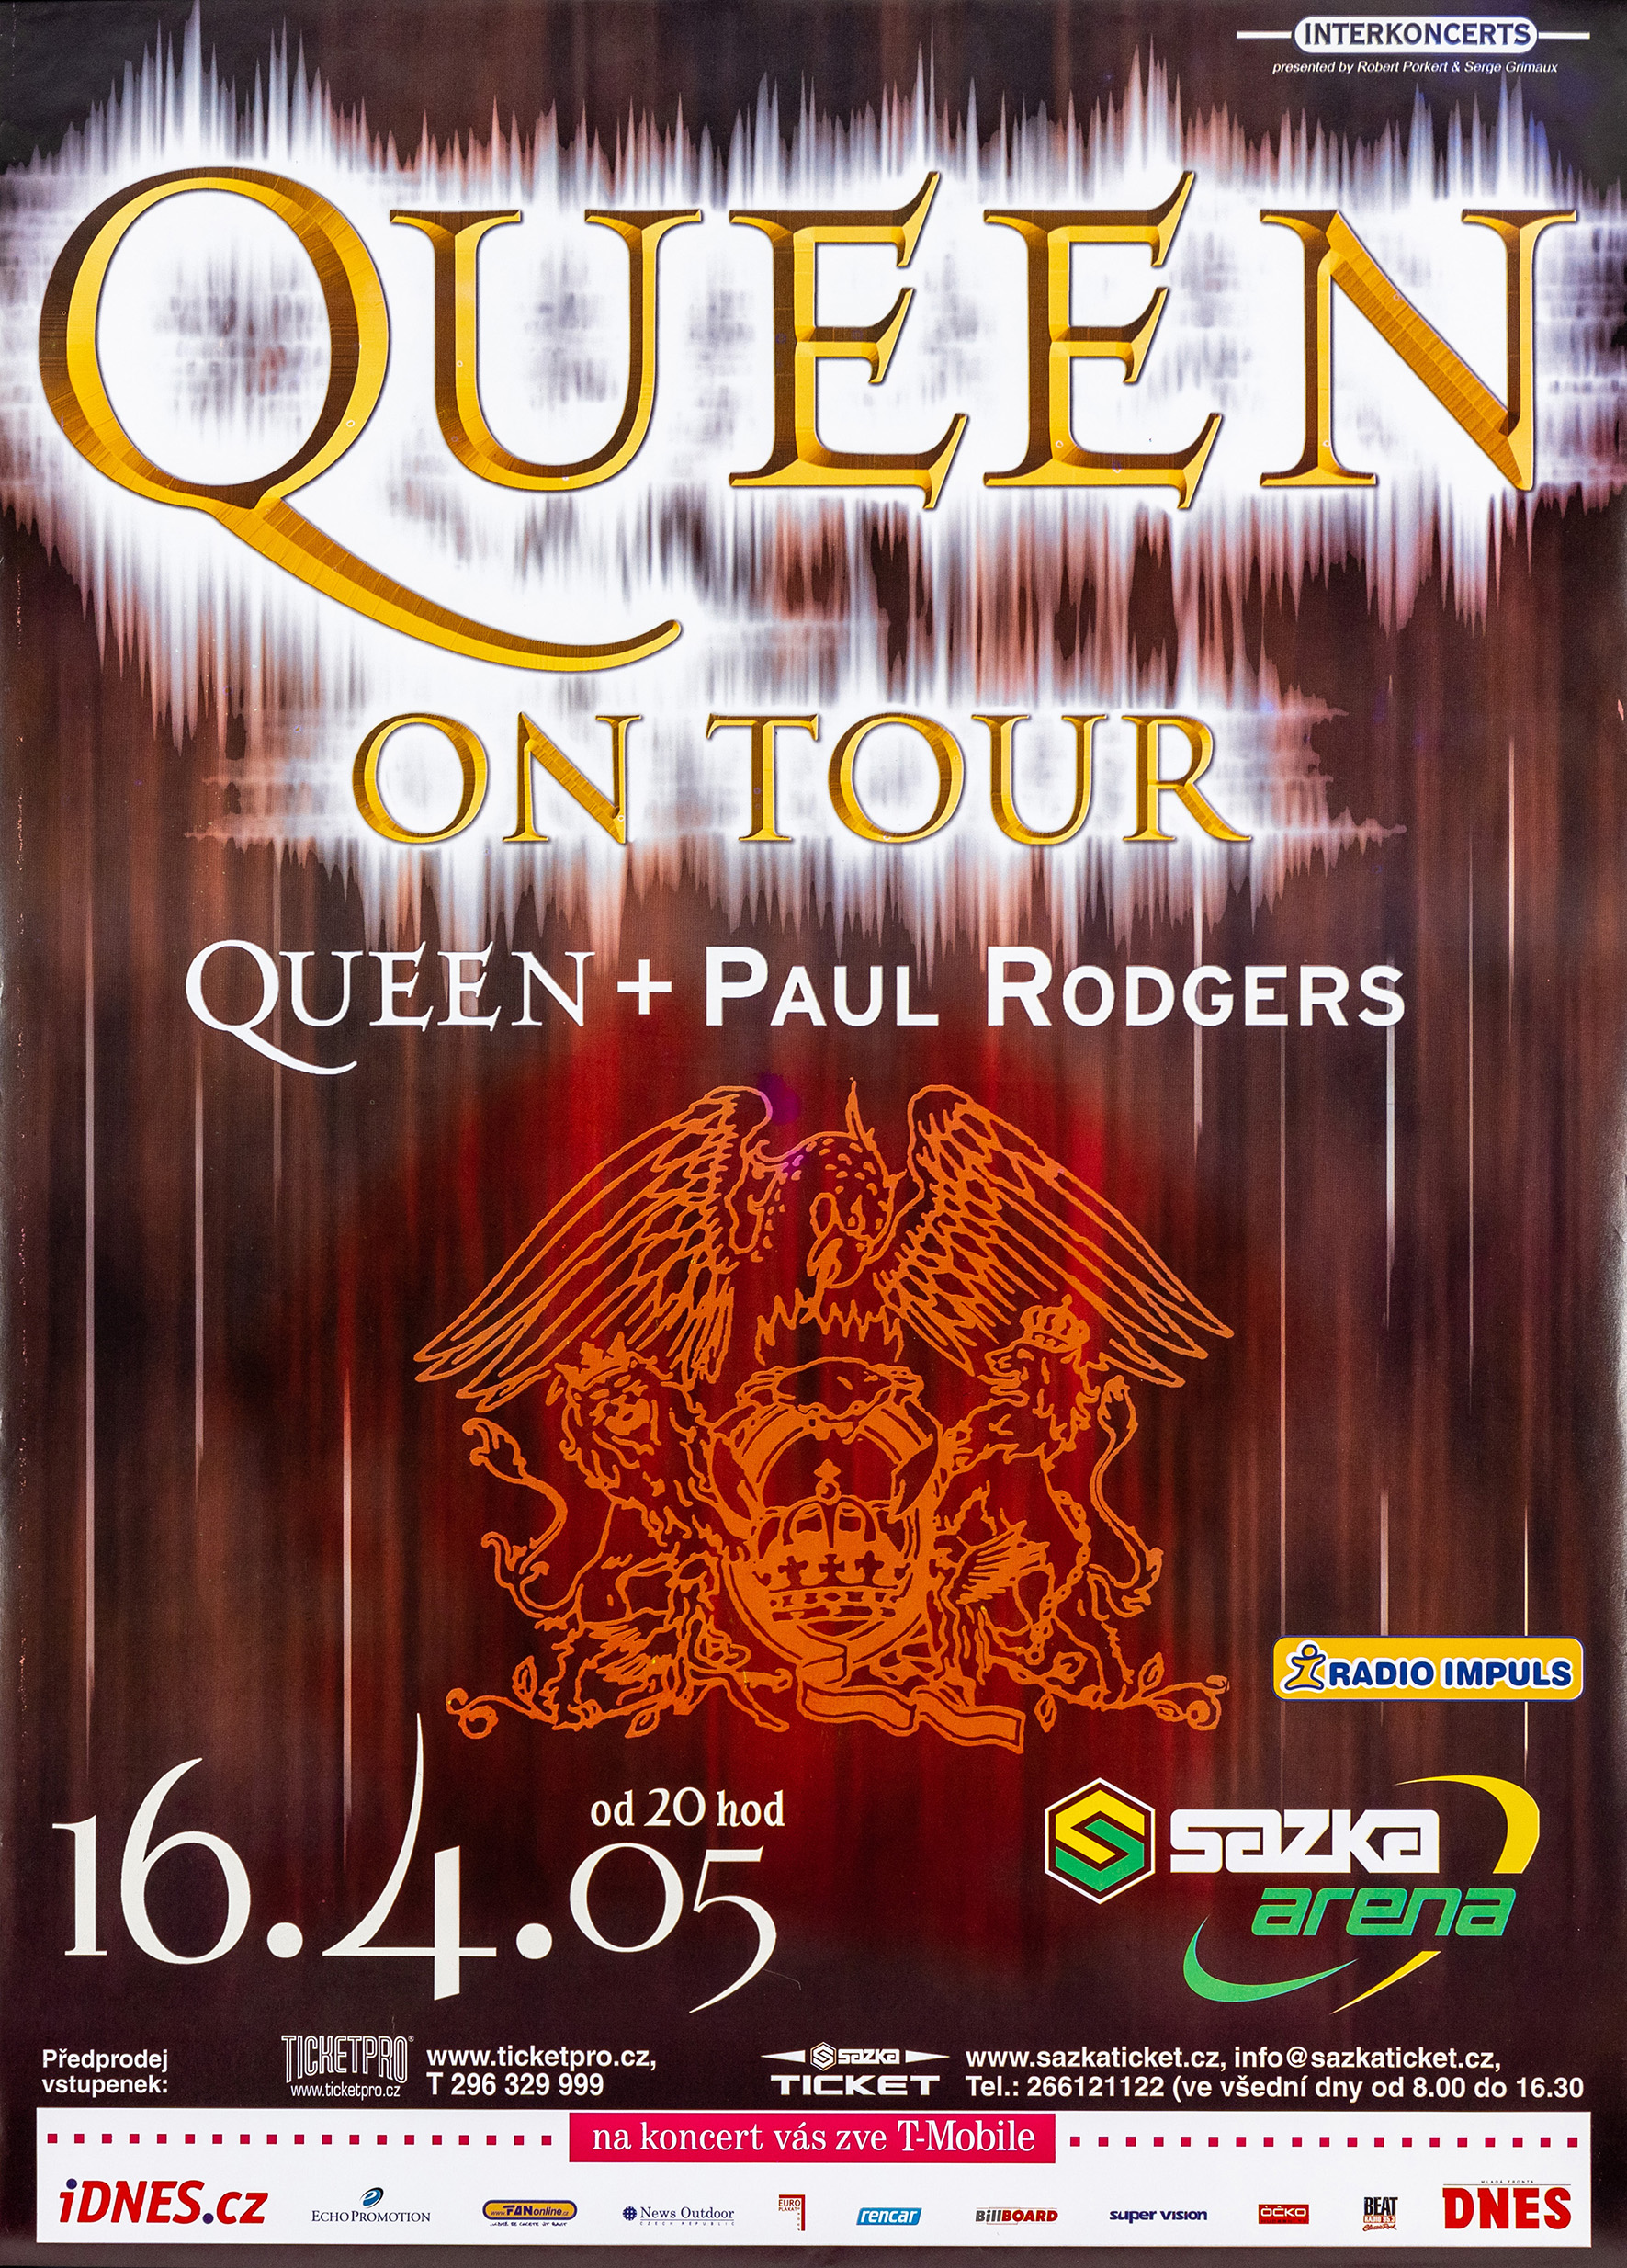 Queen + Paul Rodgers in Prague on 16.04.2005